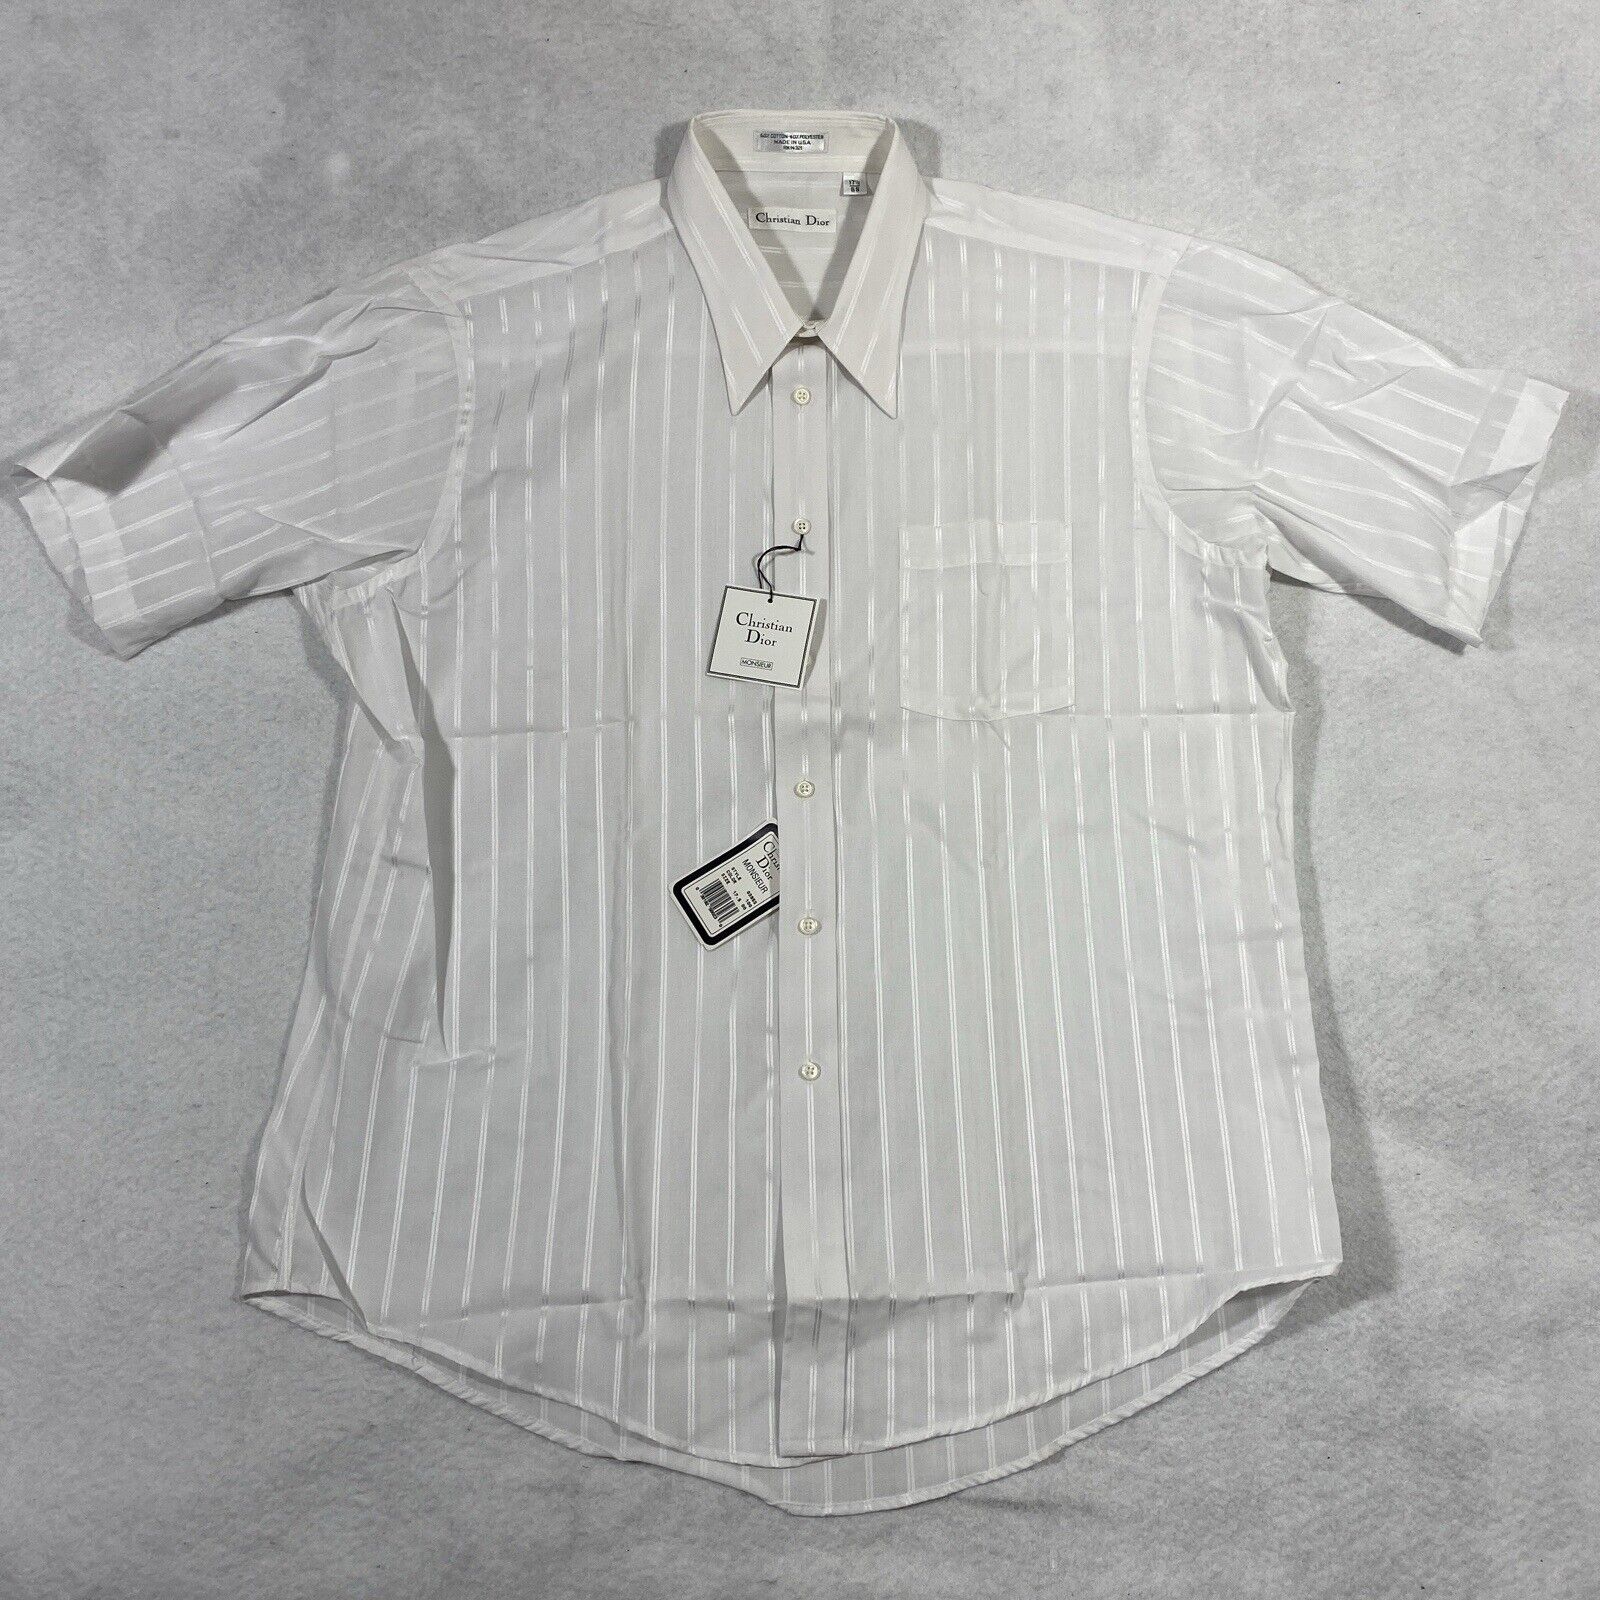 NWT Vintage Christian Dior Dress Shirt Men’s Size 17.5 XL Short Sleeve White